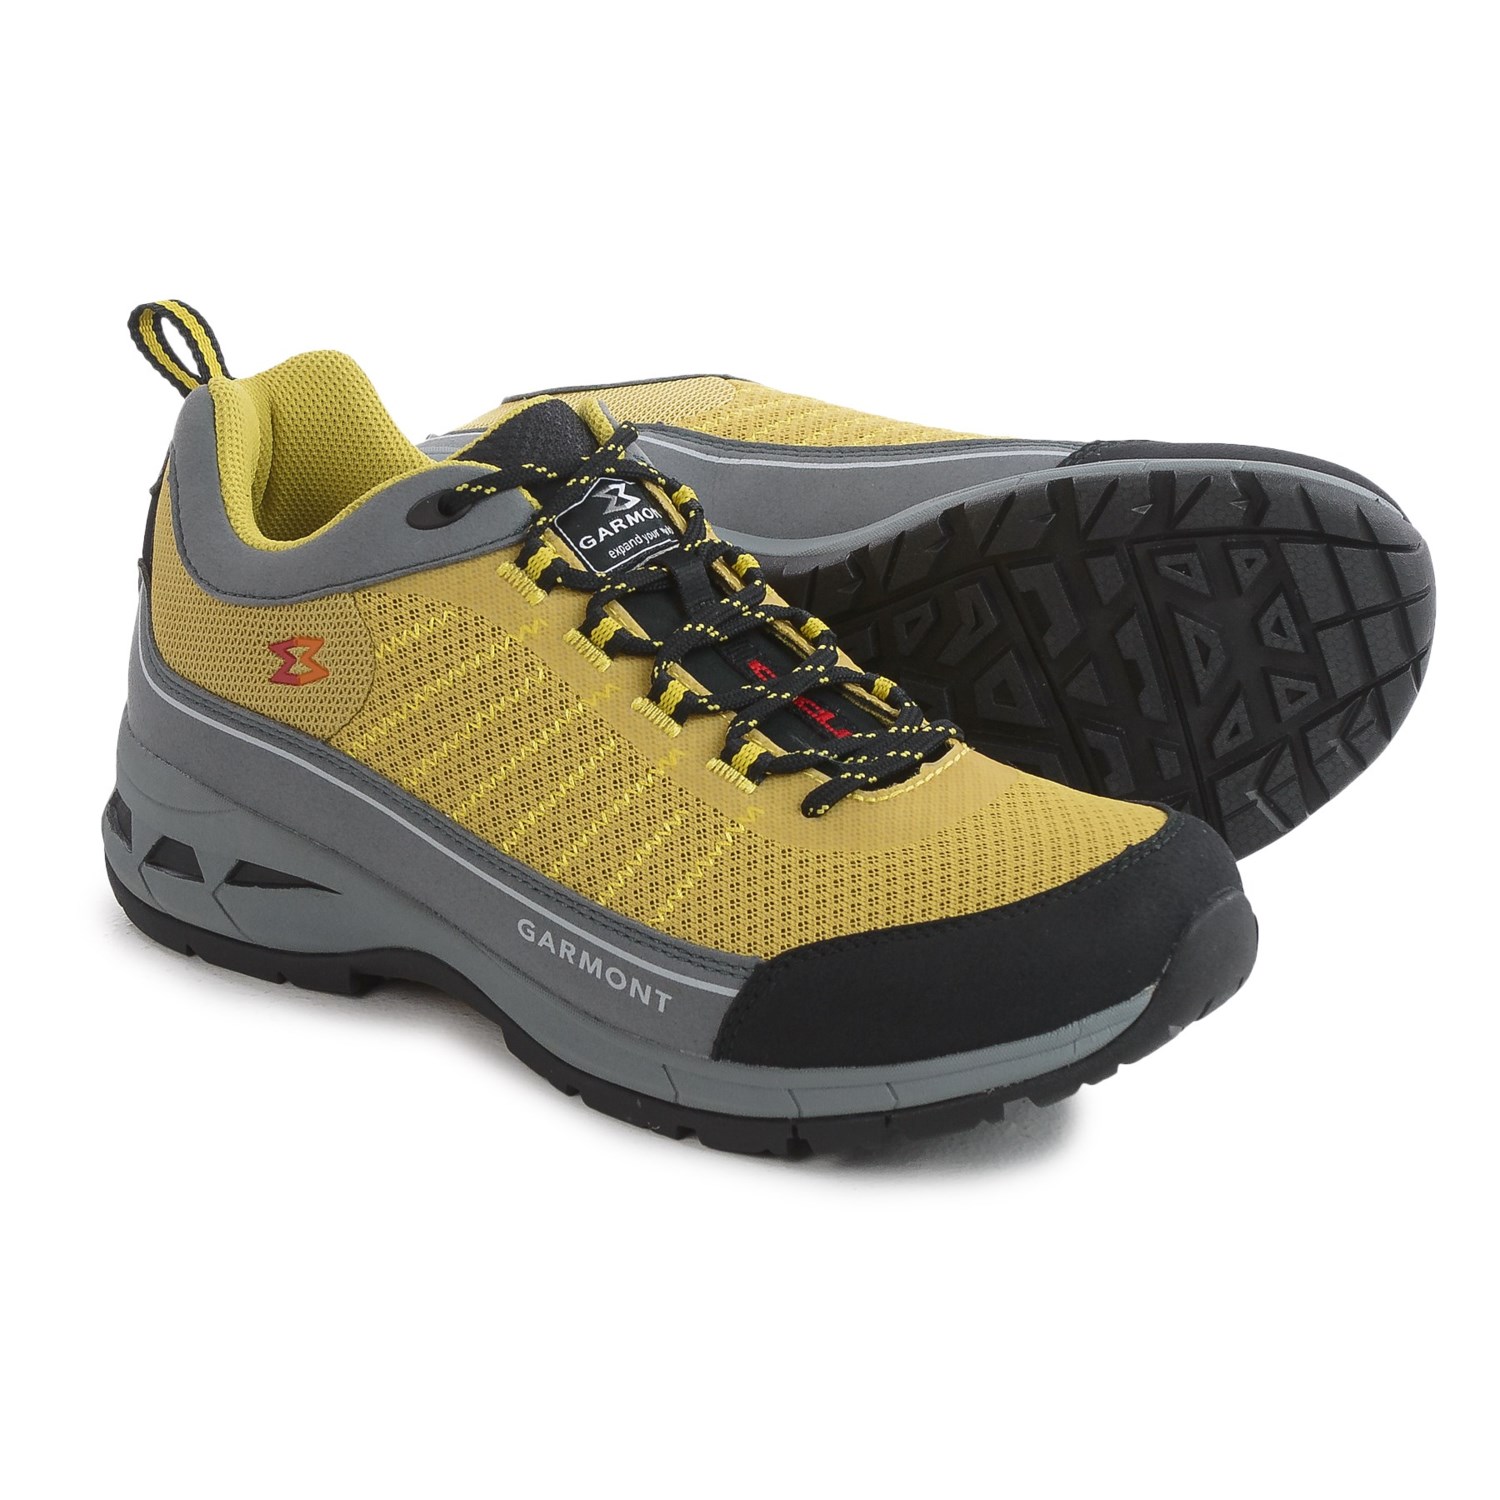 Garmont Nagevi Vented Hiking Shoes (for Men) $59.99 (vs. $125) at Sierra Trading Post